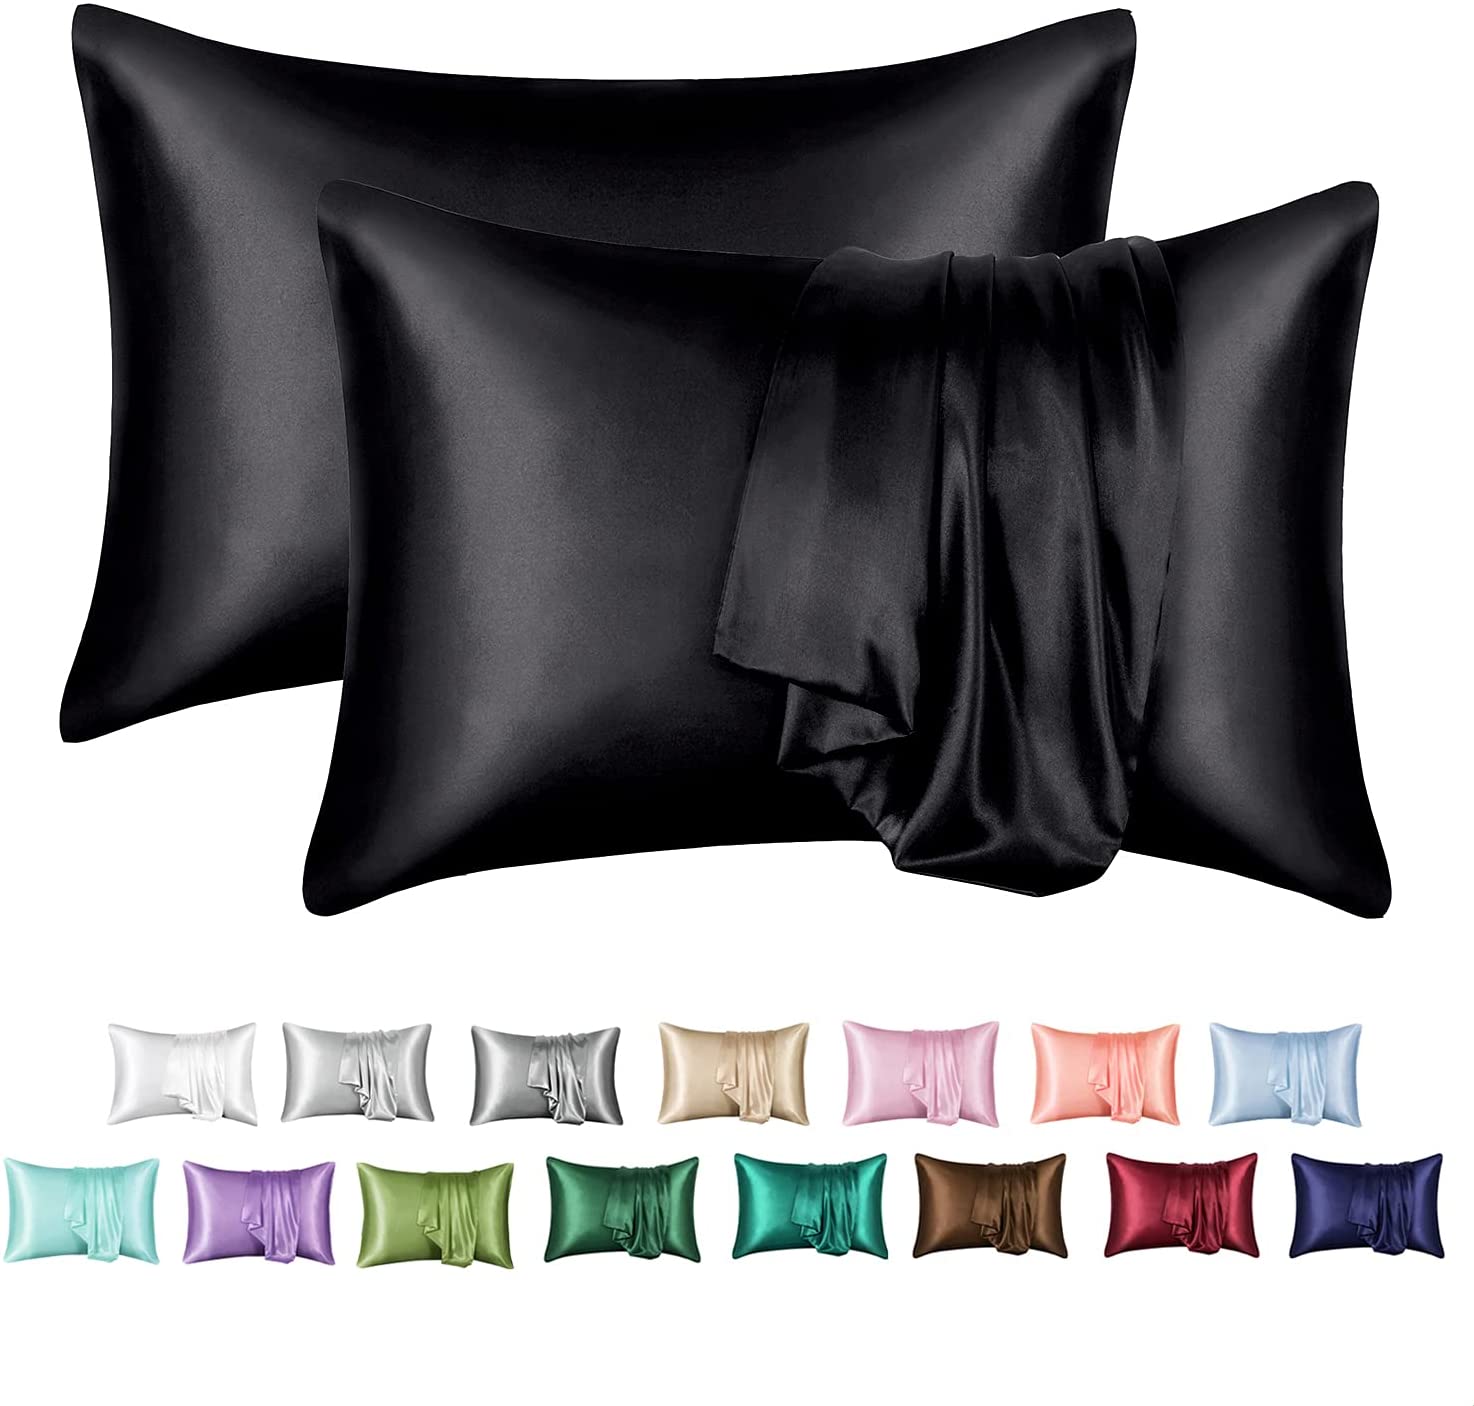 MR&HM Hypoallergenic Satin Pillowcases, 2-Pack